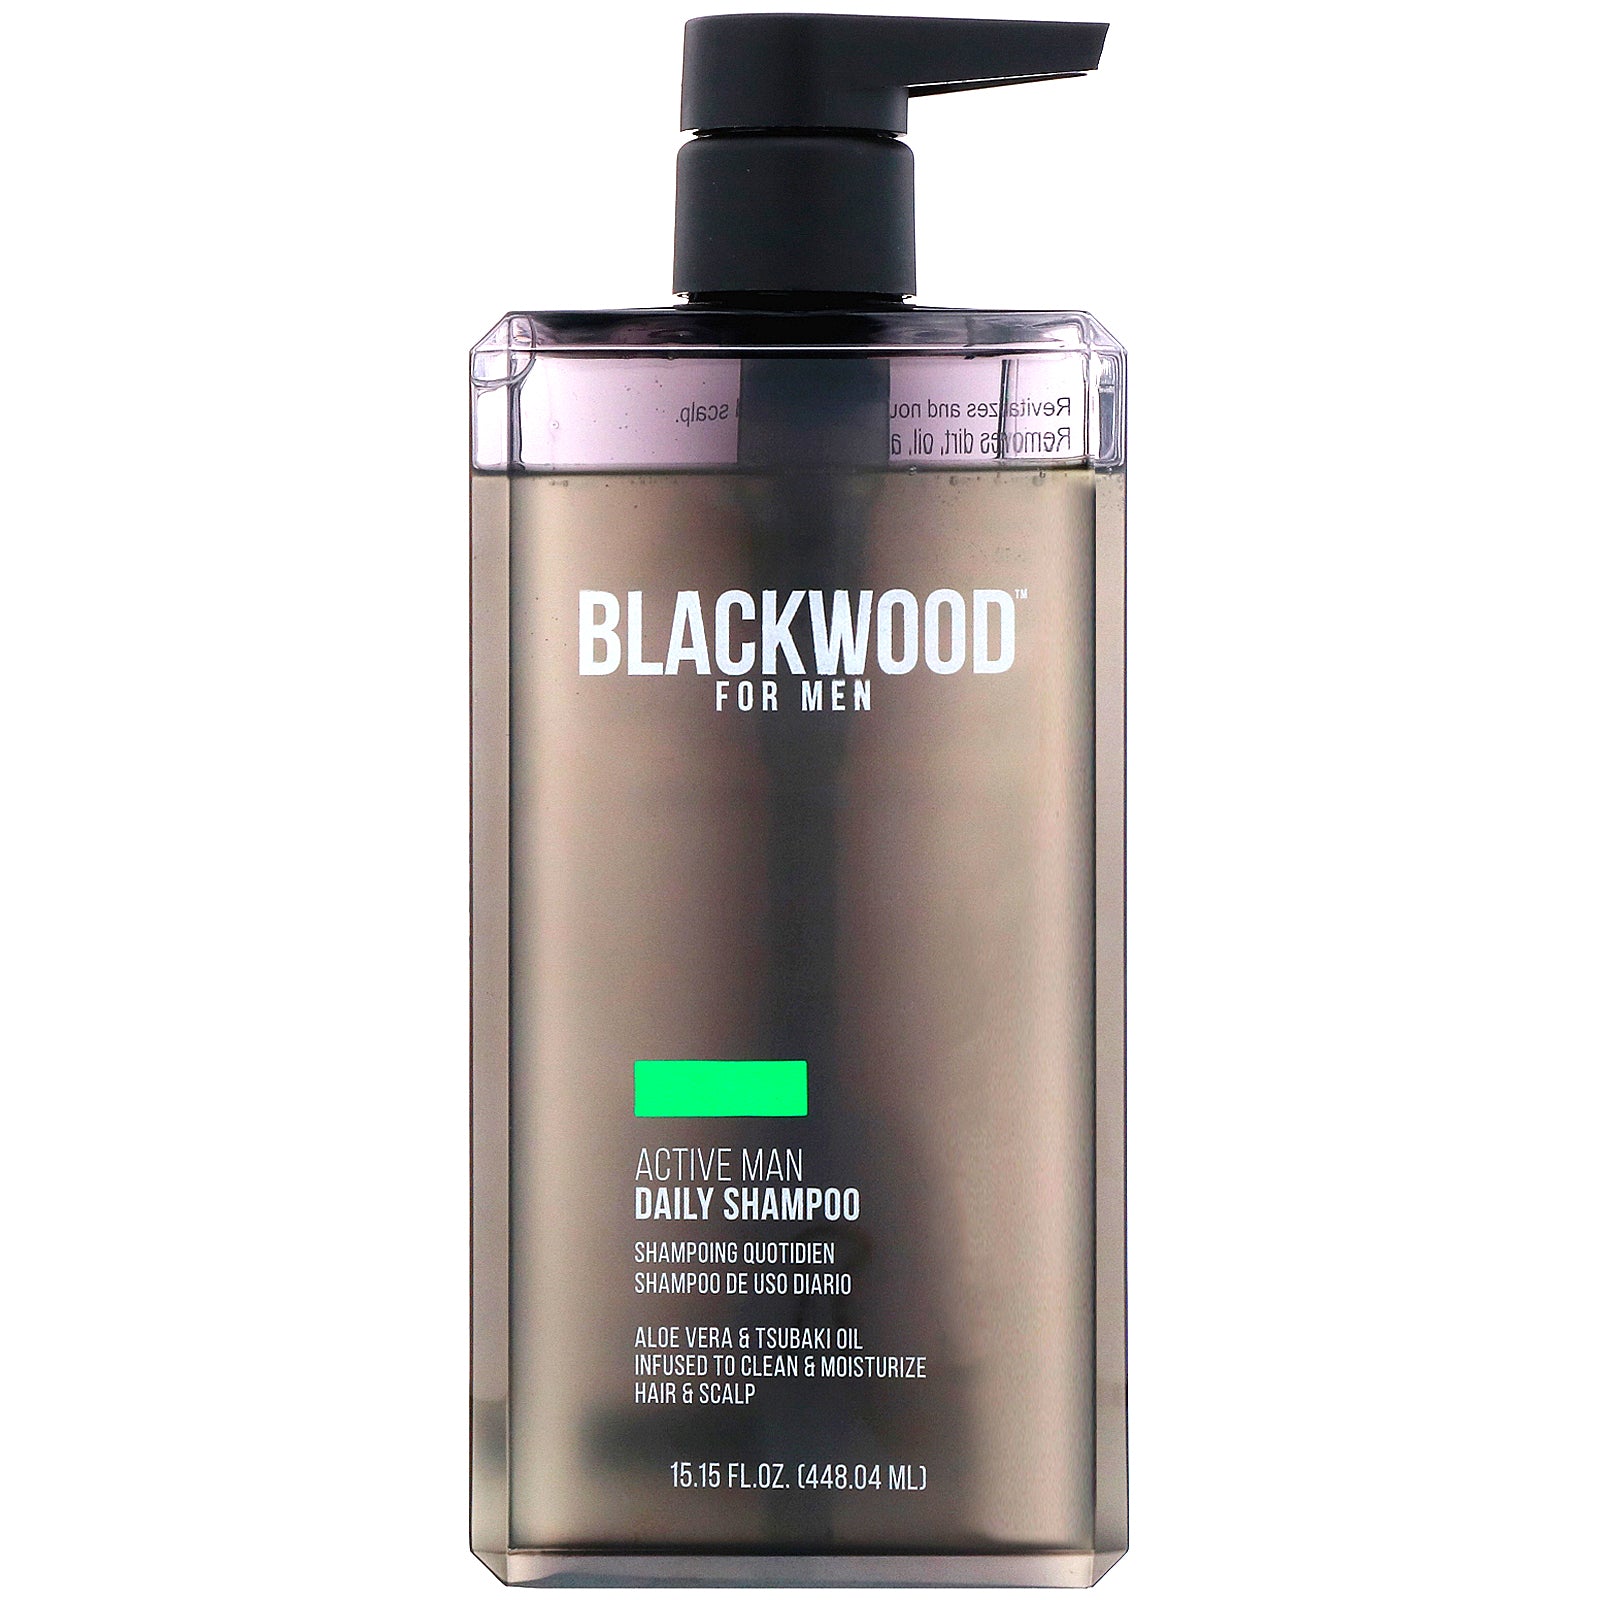 Blackwood For Men, Active Man Daily Shampoo, For Men, 15.15 fl oz (448.04 ml)